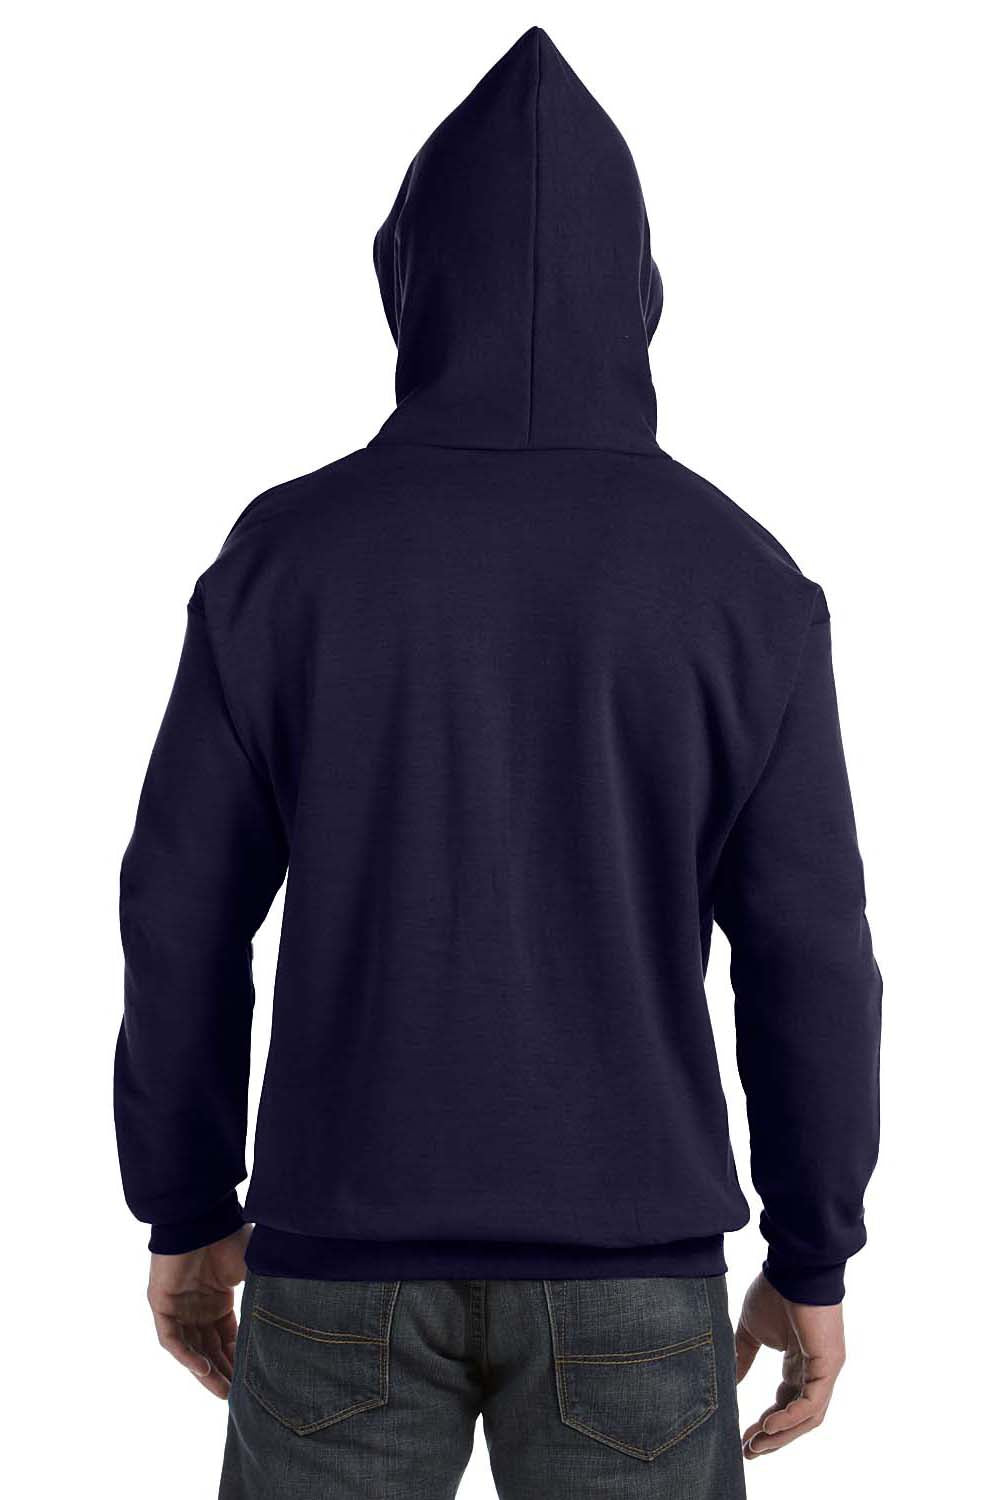 Hanes P170 Mens EcoSmart Print Pro XP Hooded Sweatshirt Hoodie Navy Blue Back